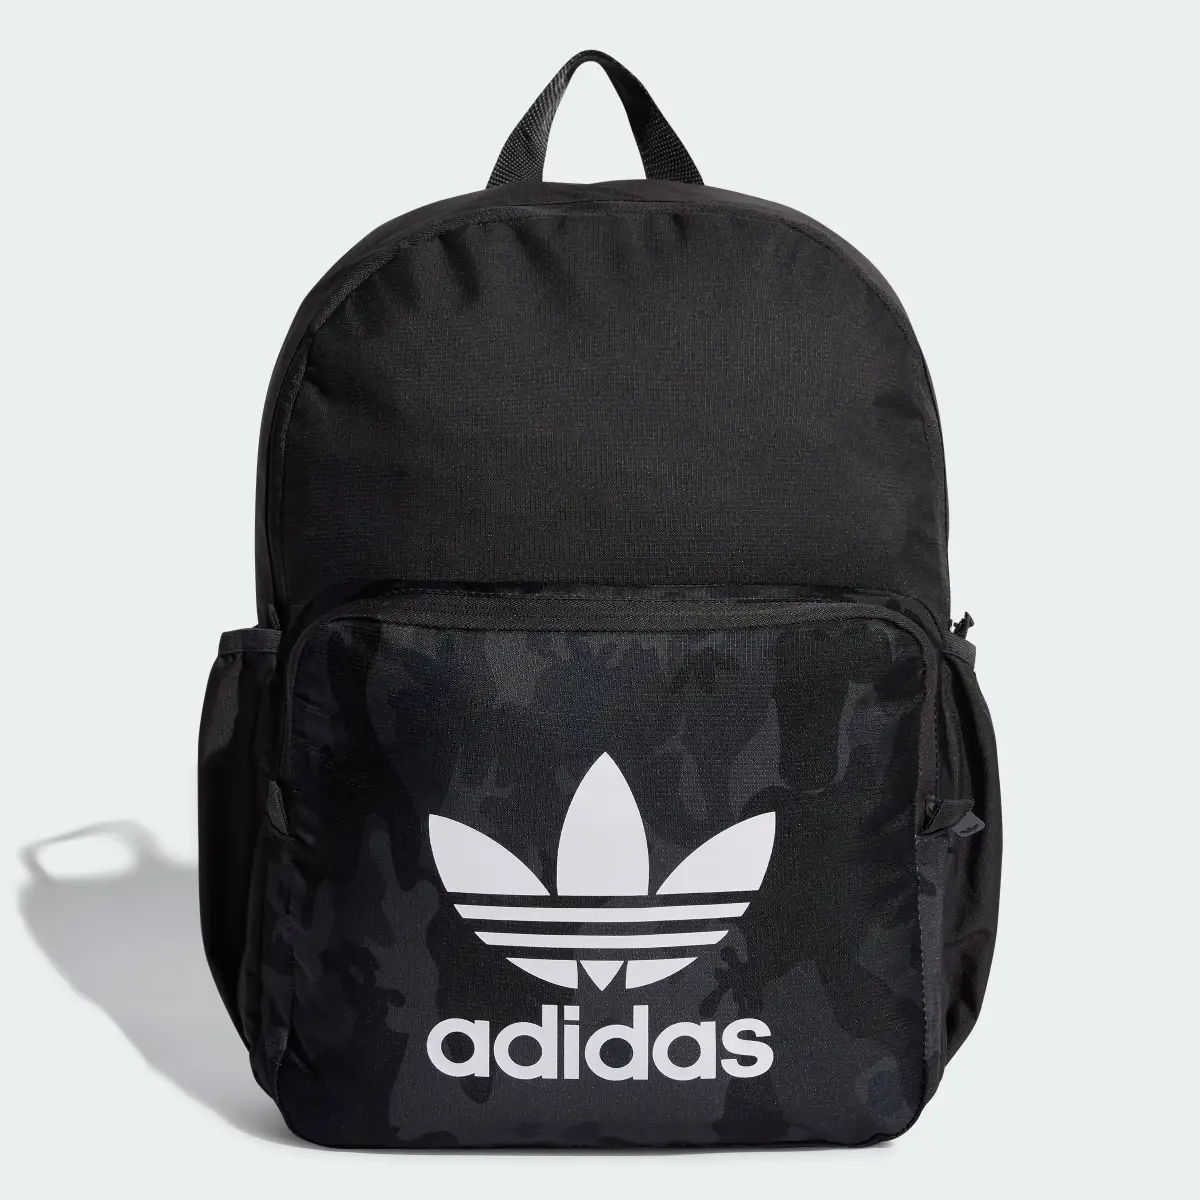 Adidas Camo Graphics Backpack. 1